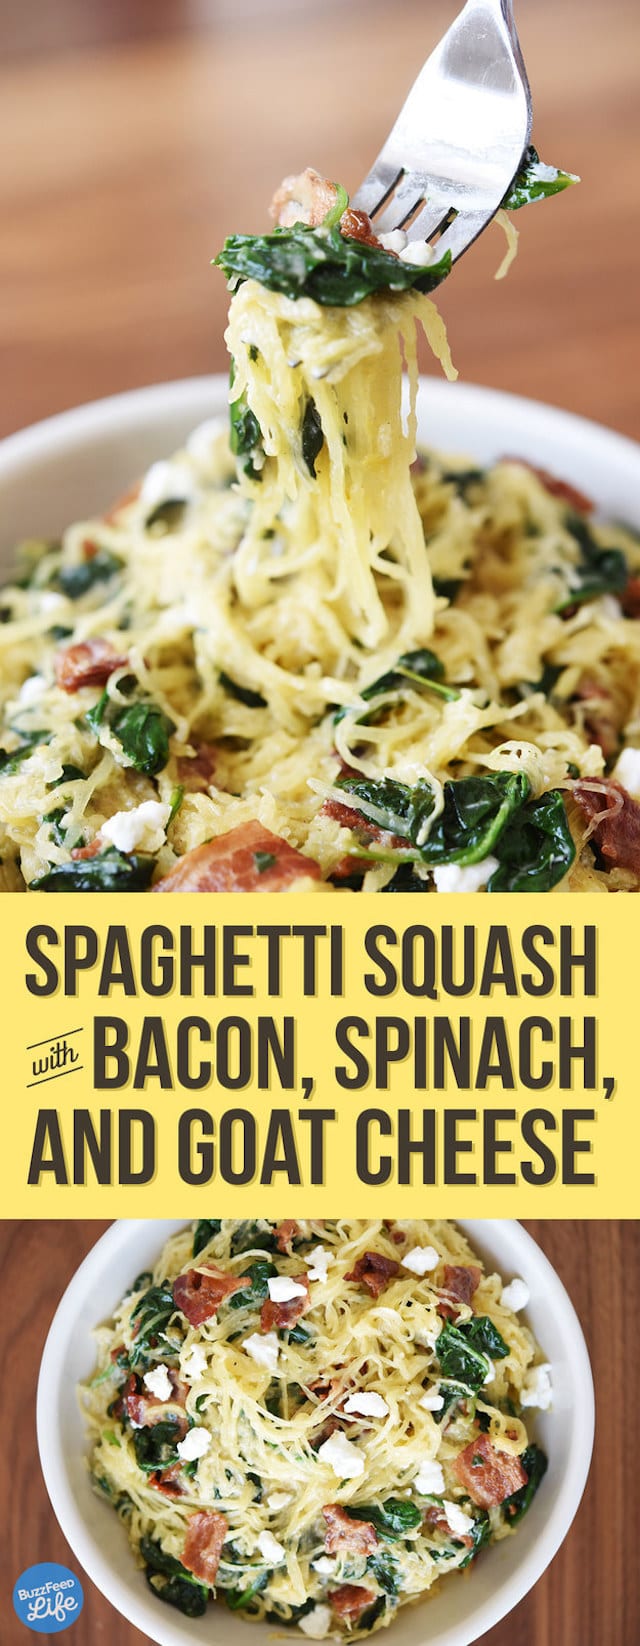 Recipes to Make Spaghetti Squash Spectacular